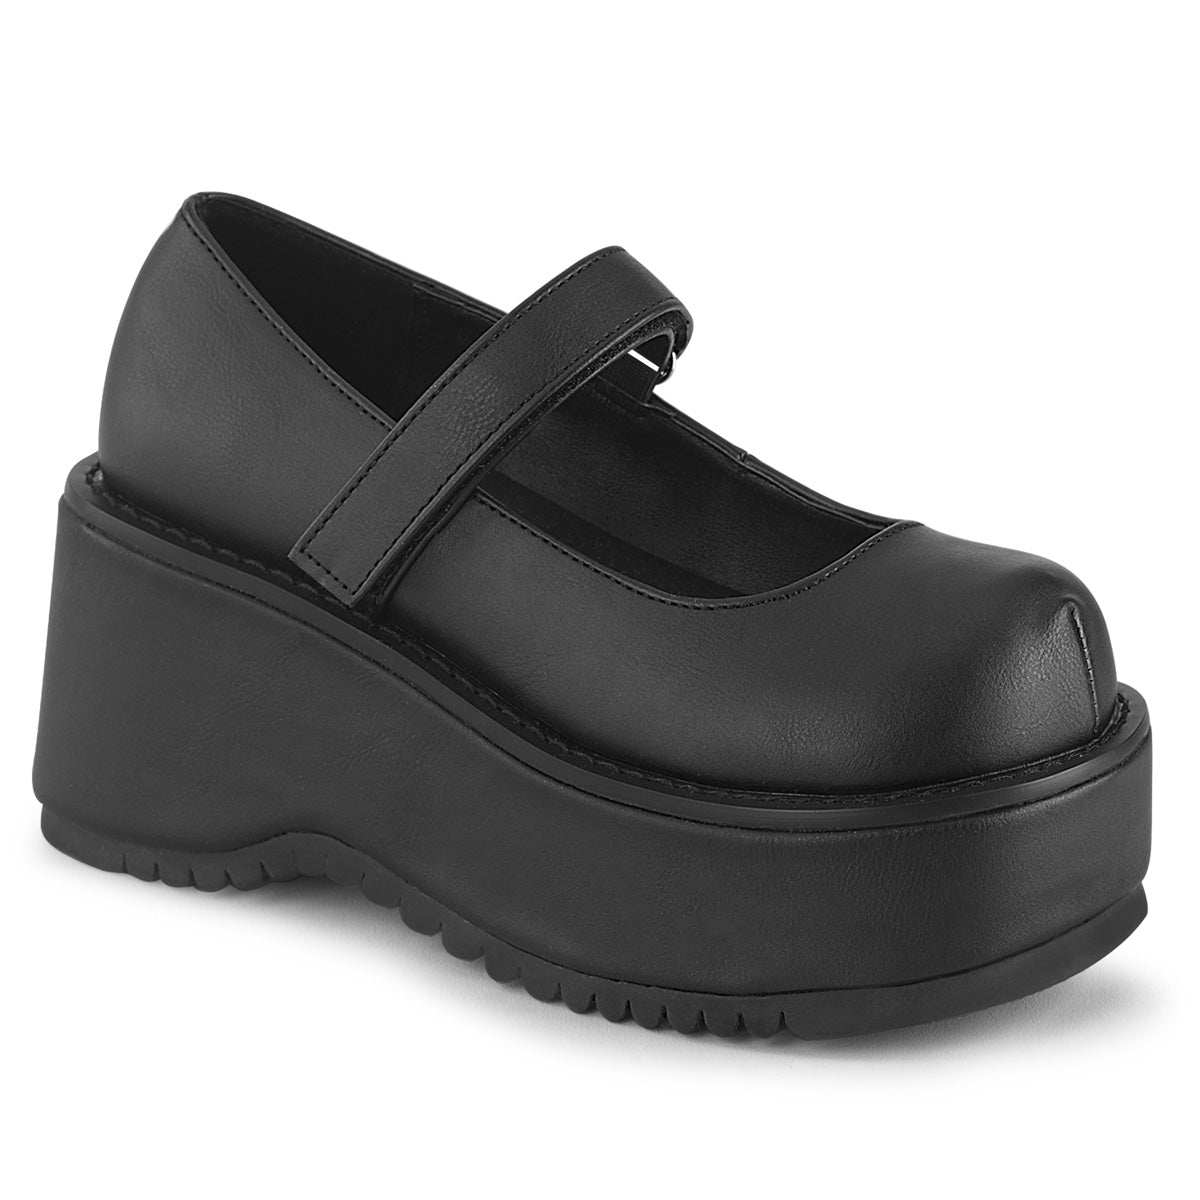 DOLLIE-01 Alternative Footwear Demonia Women's Heels & Platform Shoes Blk Vegan Leather